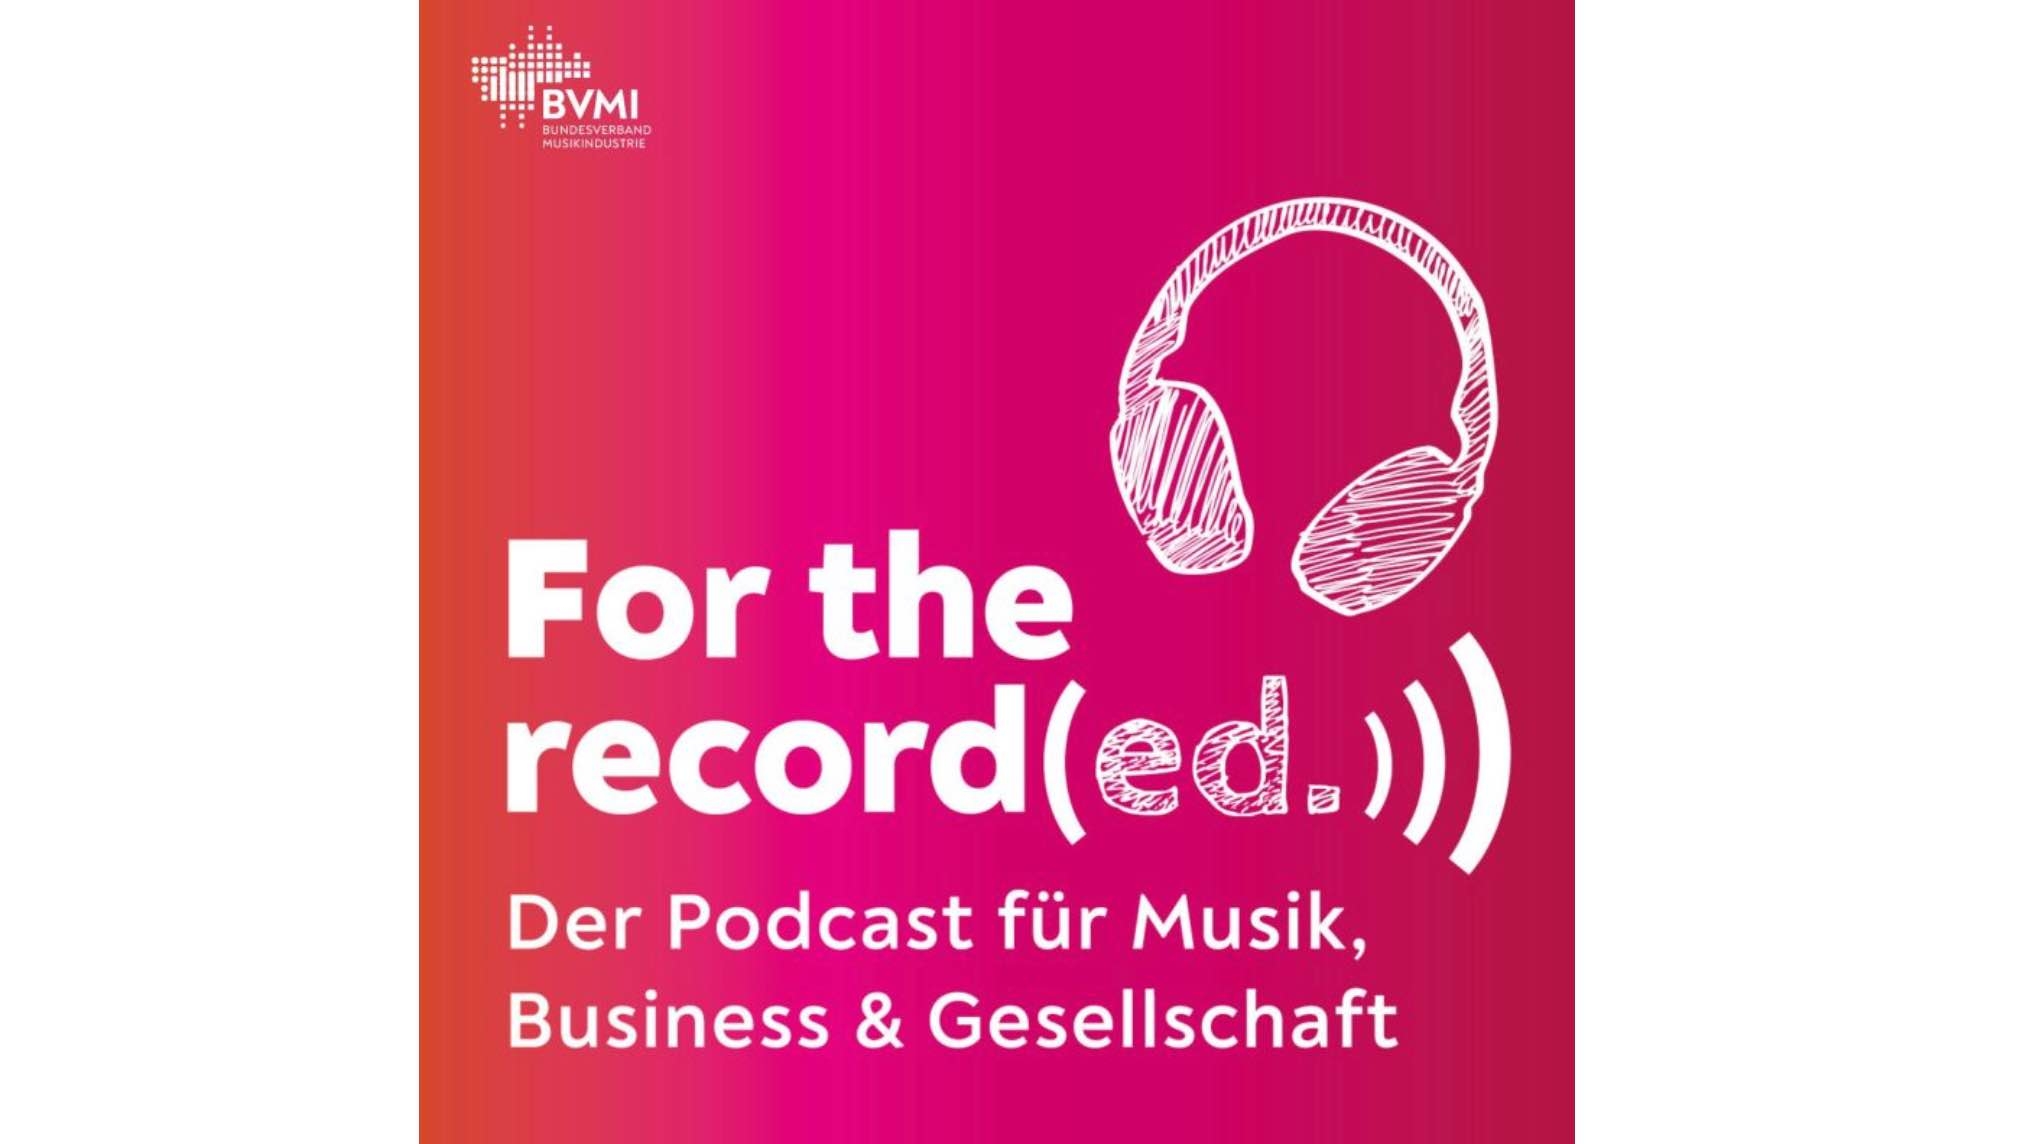 Bundesverband Musikindustrie startet Podcast-Reihe